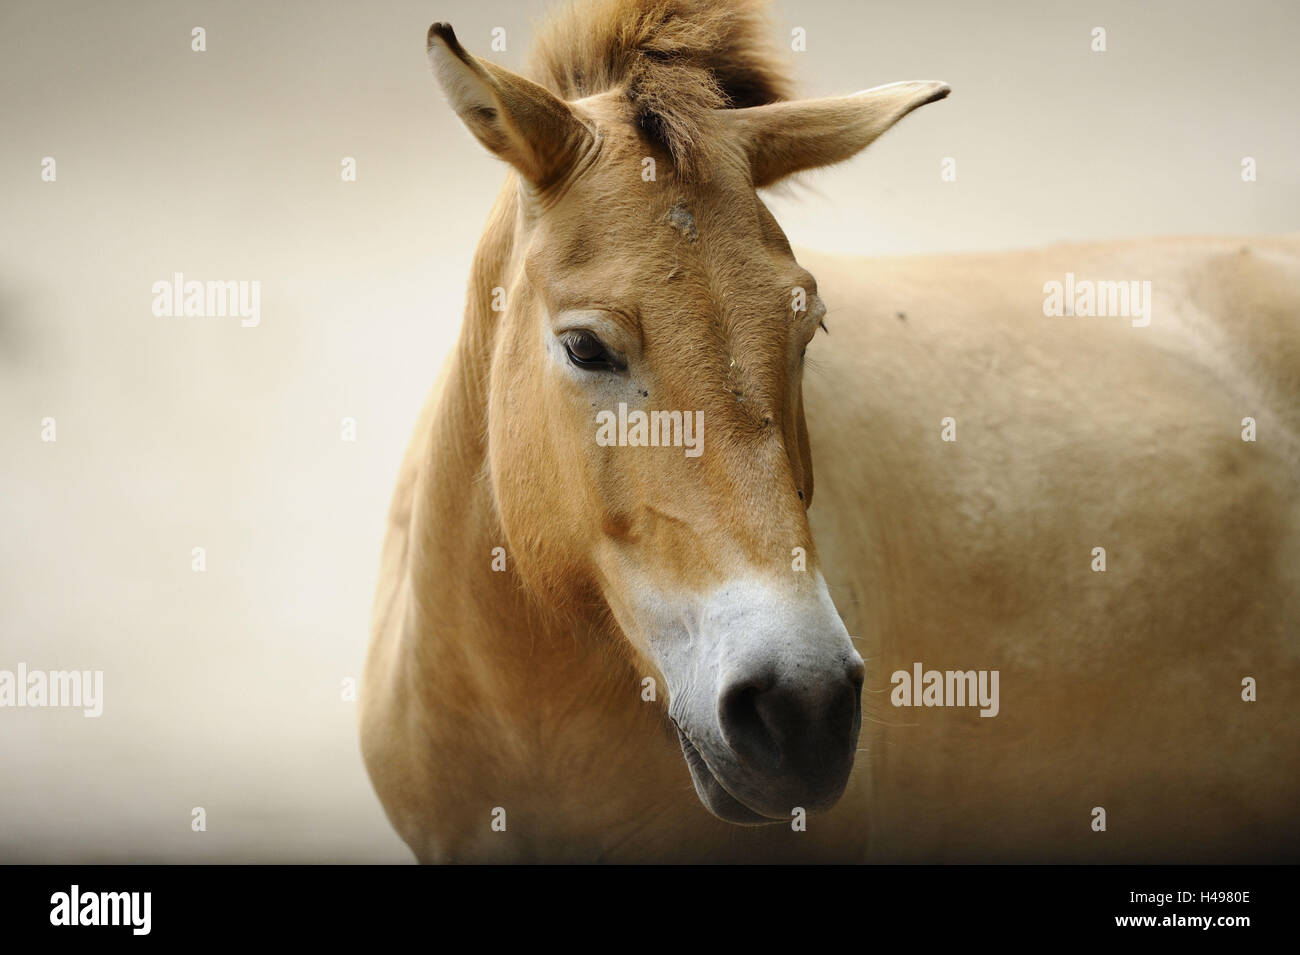 Przewalski's horse, Equus ferus przewalskii, portrait, Stock Photo